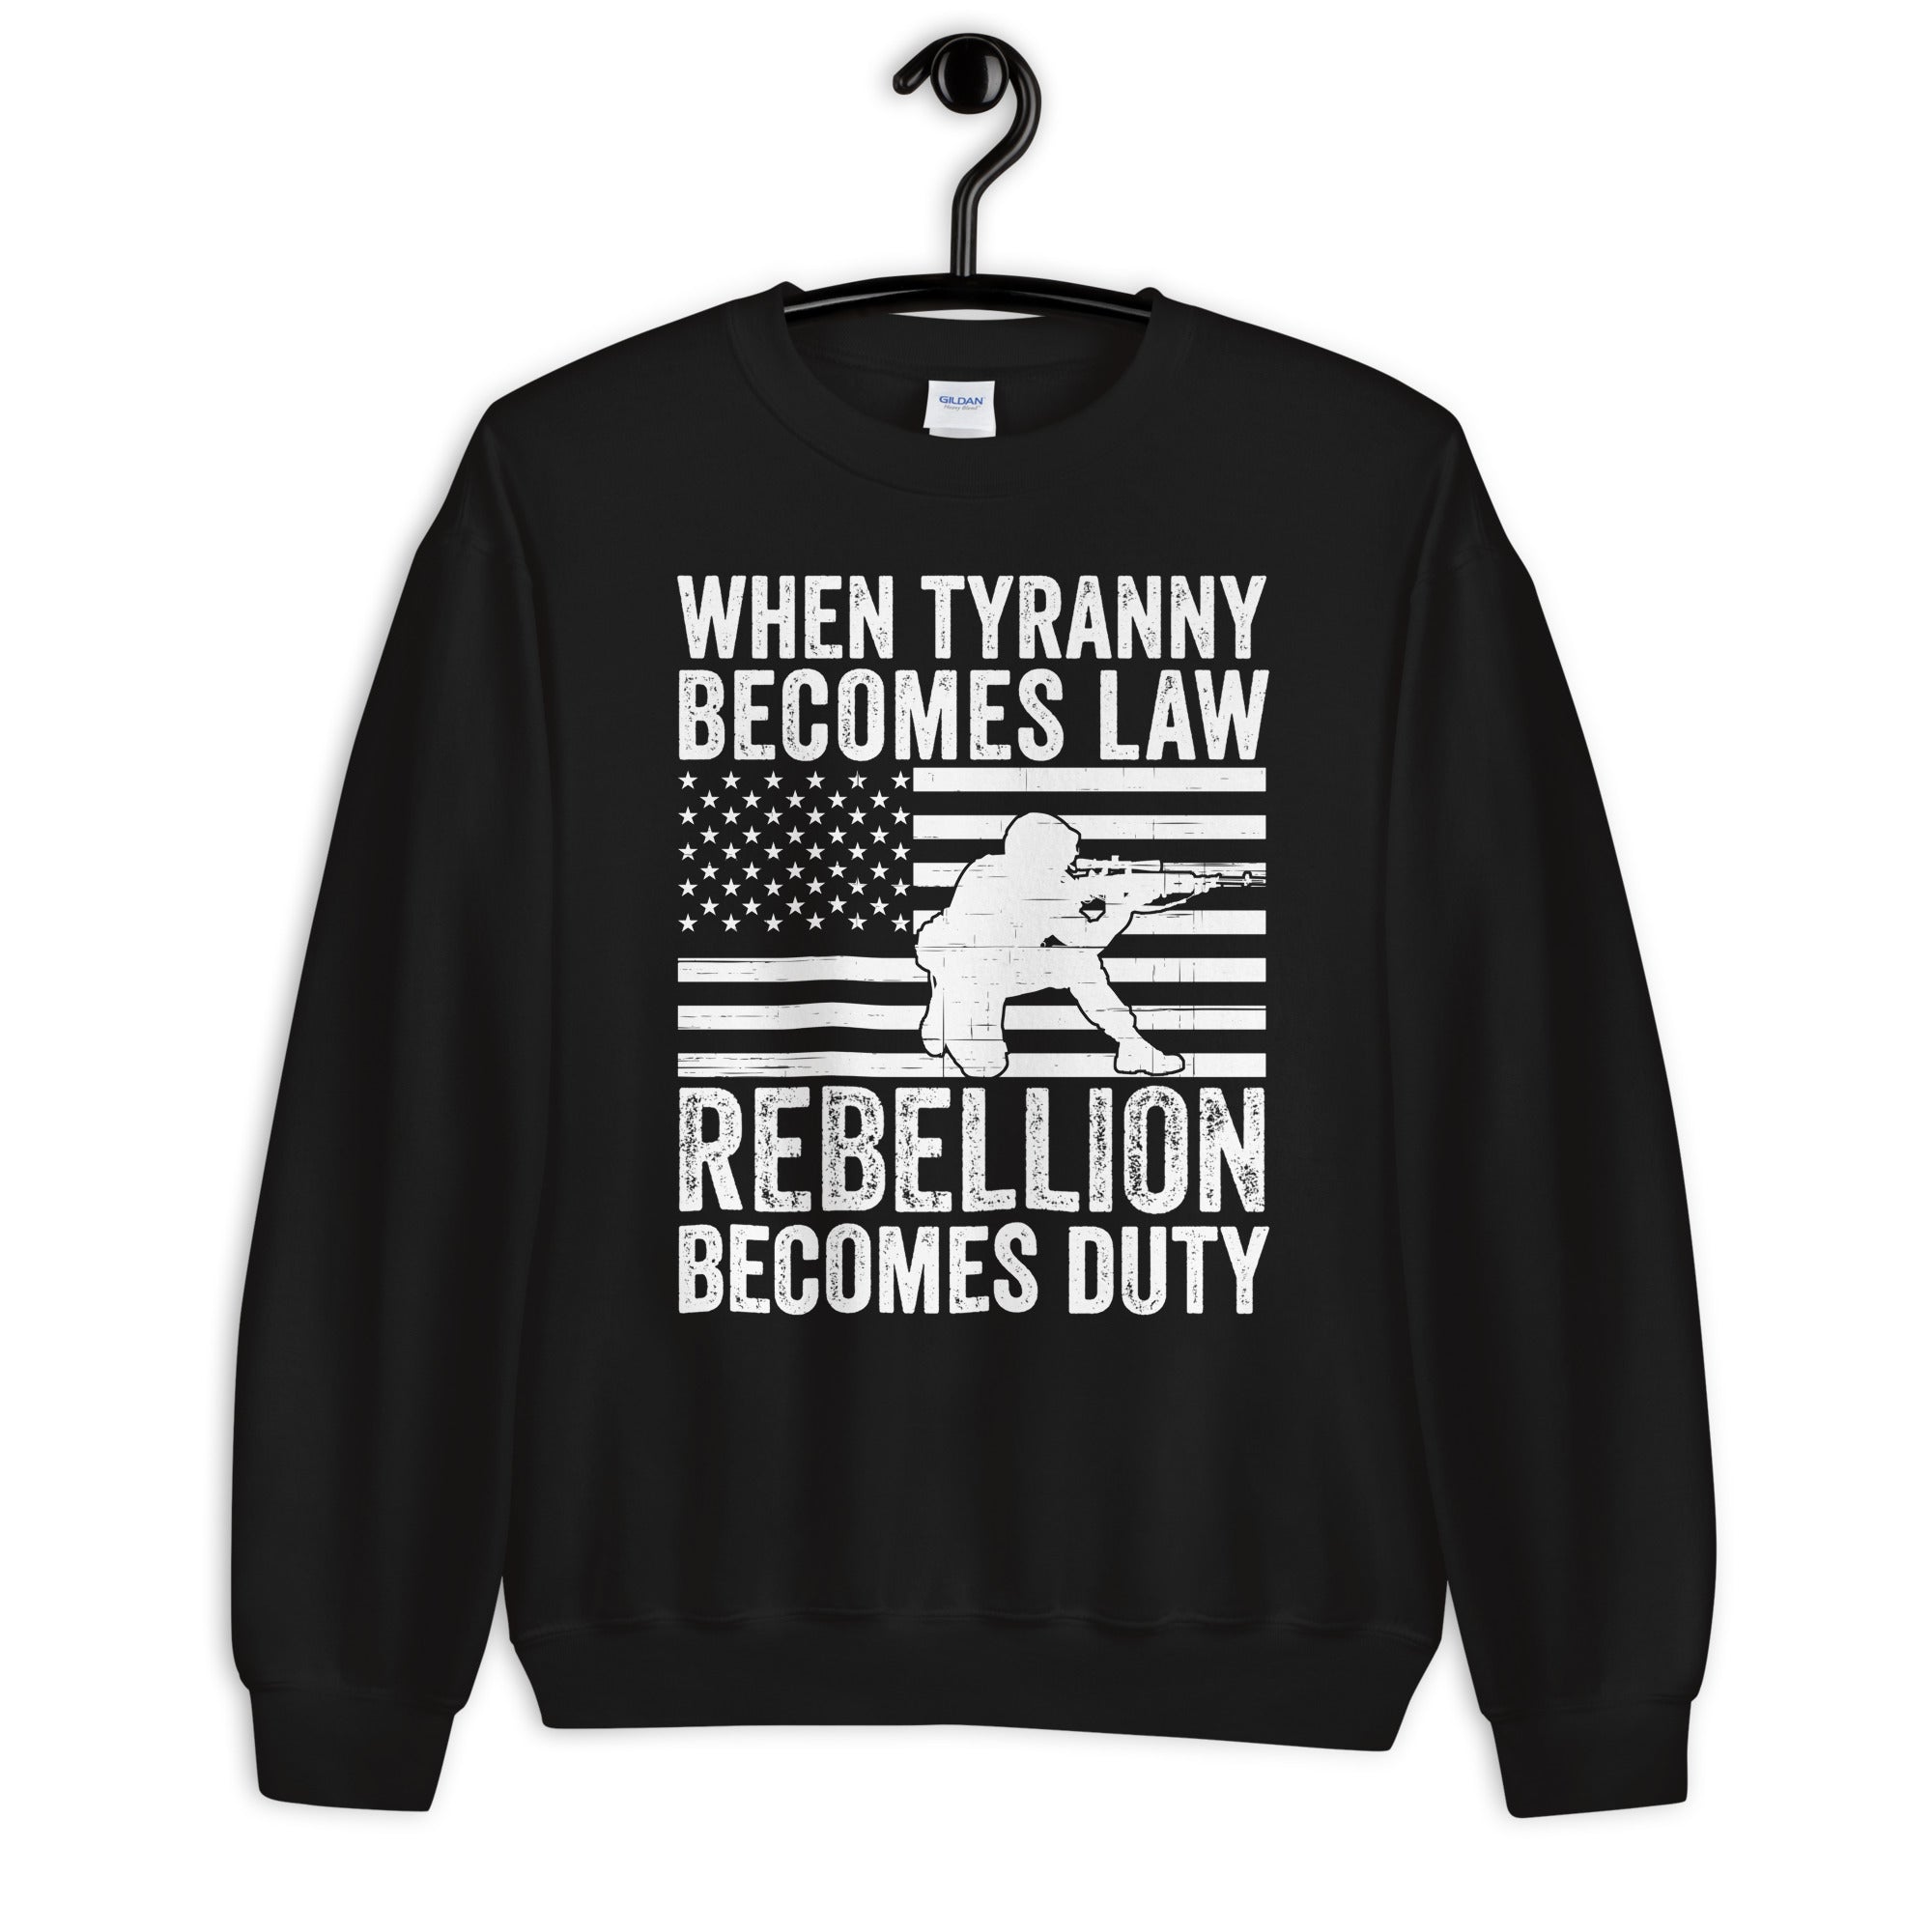 Tyranny Sweater, Rebellion Sweatshirt, When Tyranny Becomes Law, Rebellion Becomes Duty, 1776 Shirt, Thomas Jefferson, Political Shirts - Madeinsea©